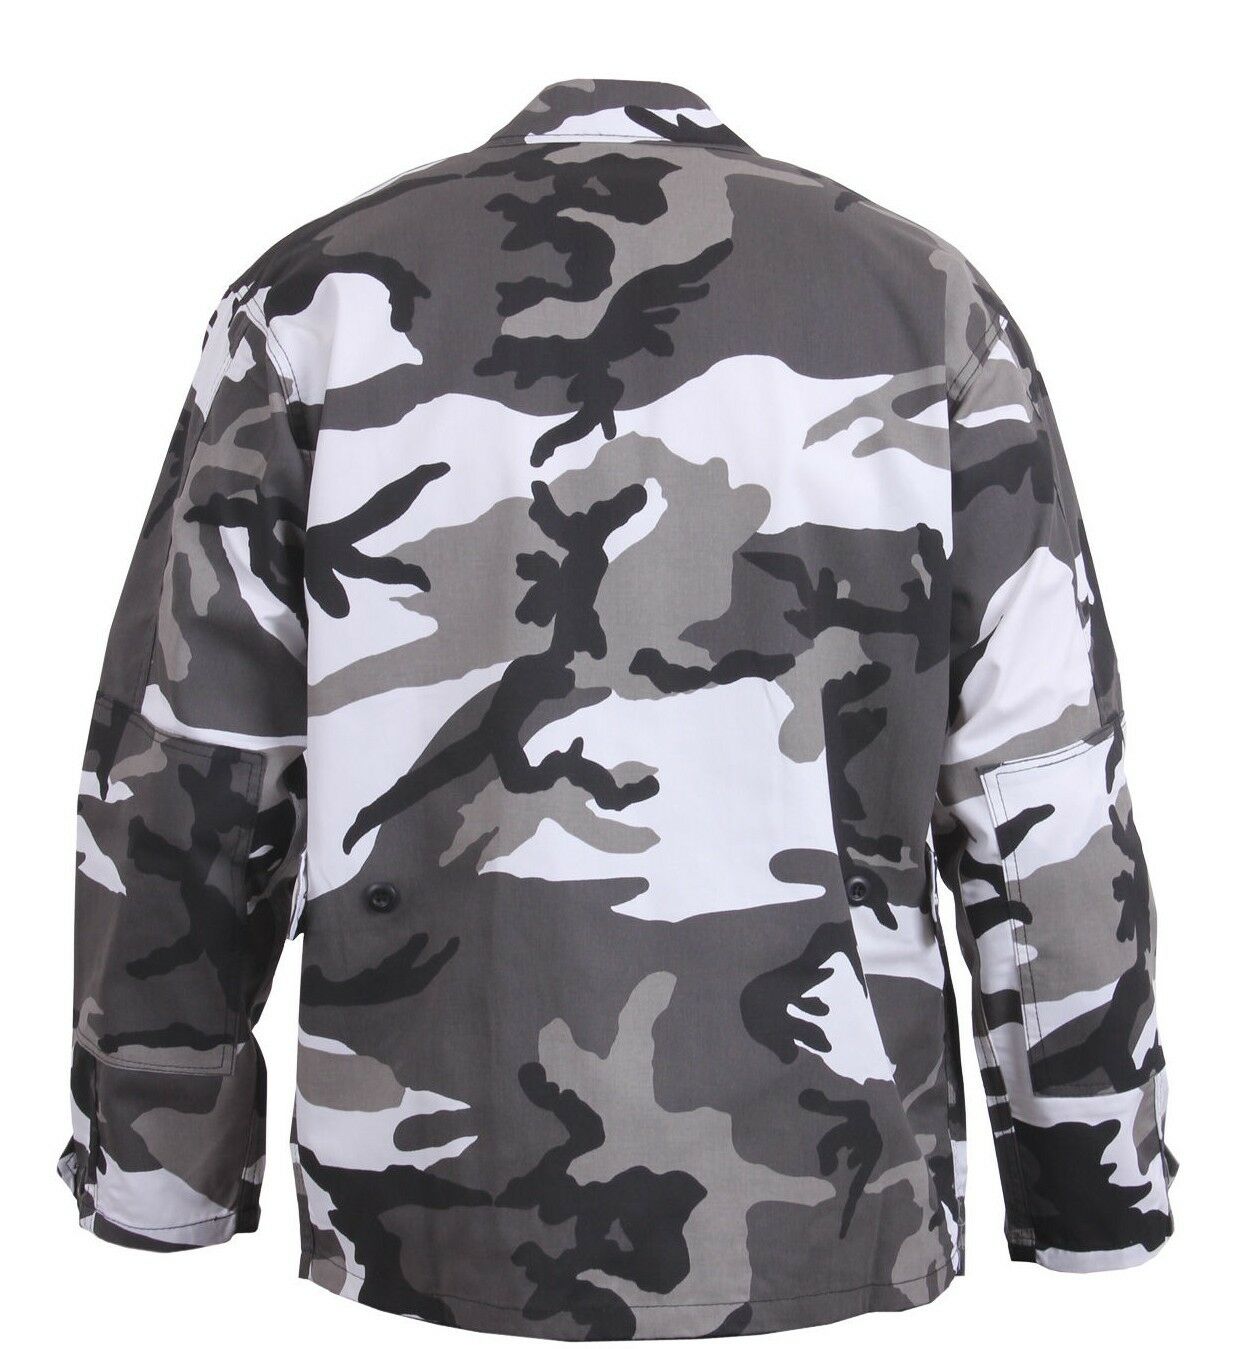 Military Style BDU Shirt Urban City Camo Camouflage Uniform Coat Rothco 8881